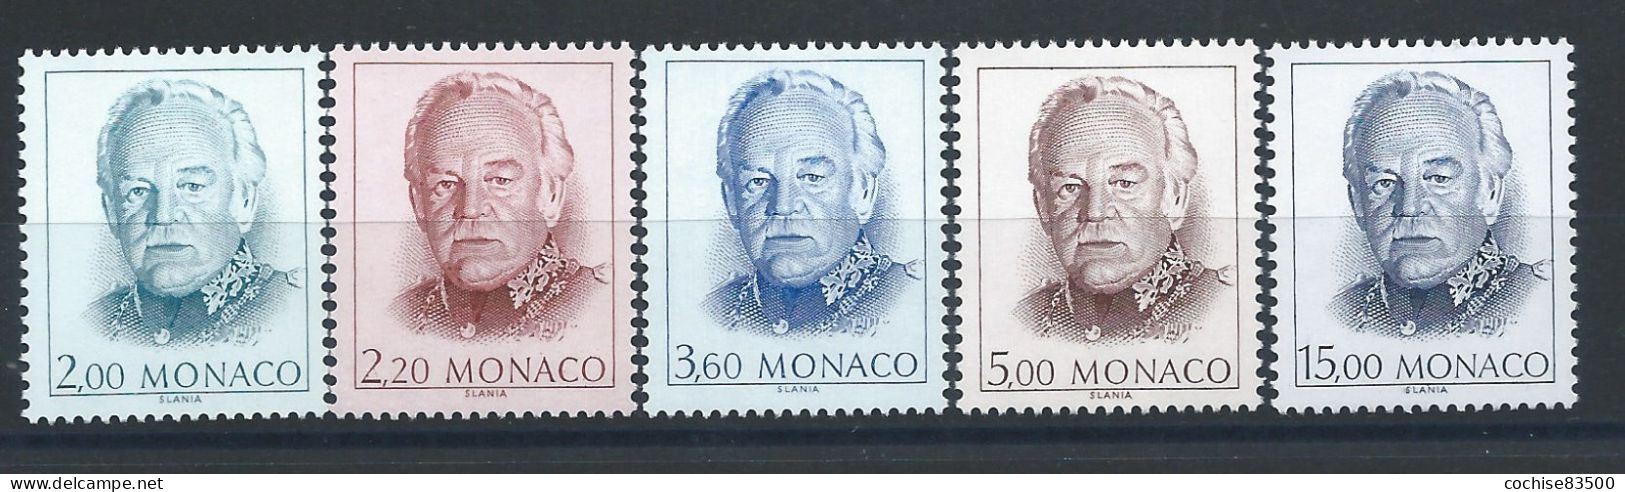 Monaco N°1671/75** (MNH) 1989 - Prince Rainier III - Unused Stamps